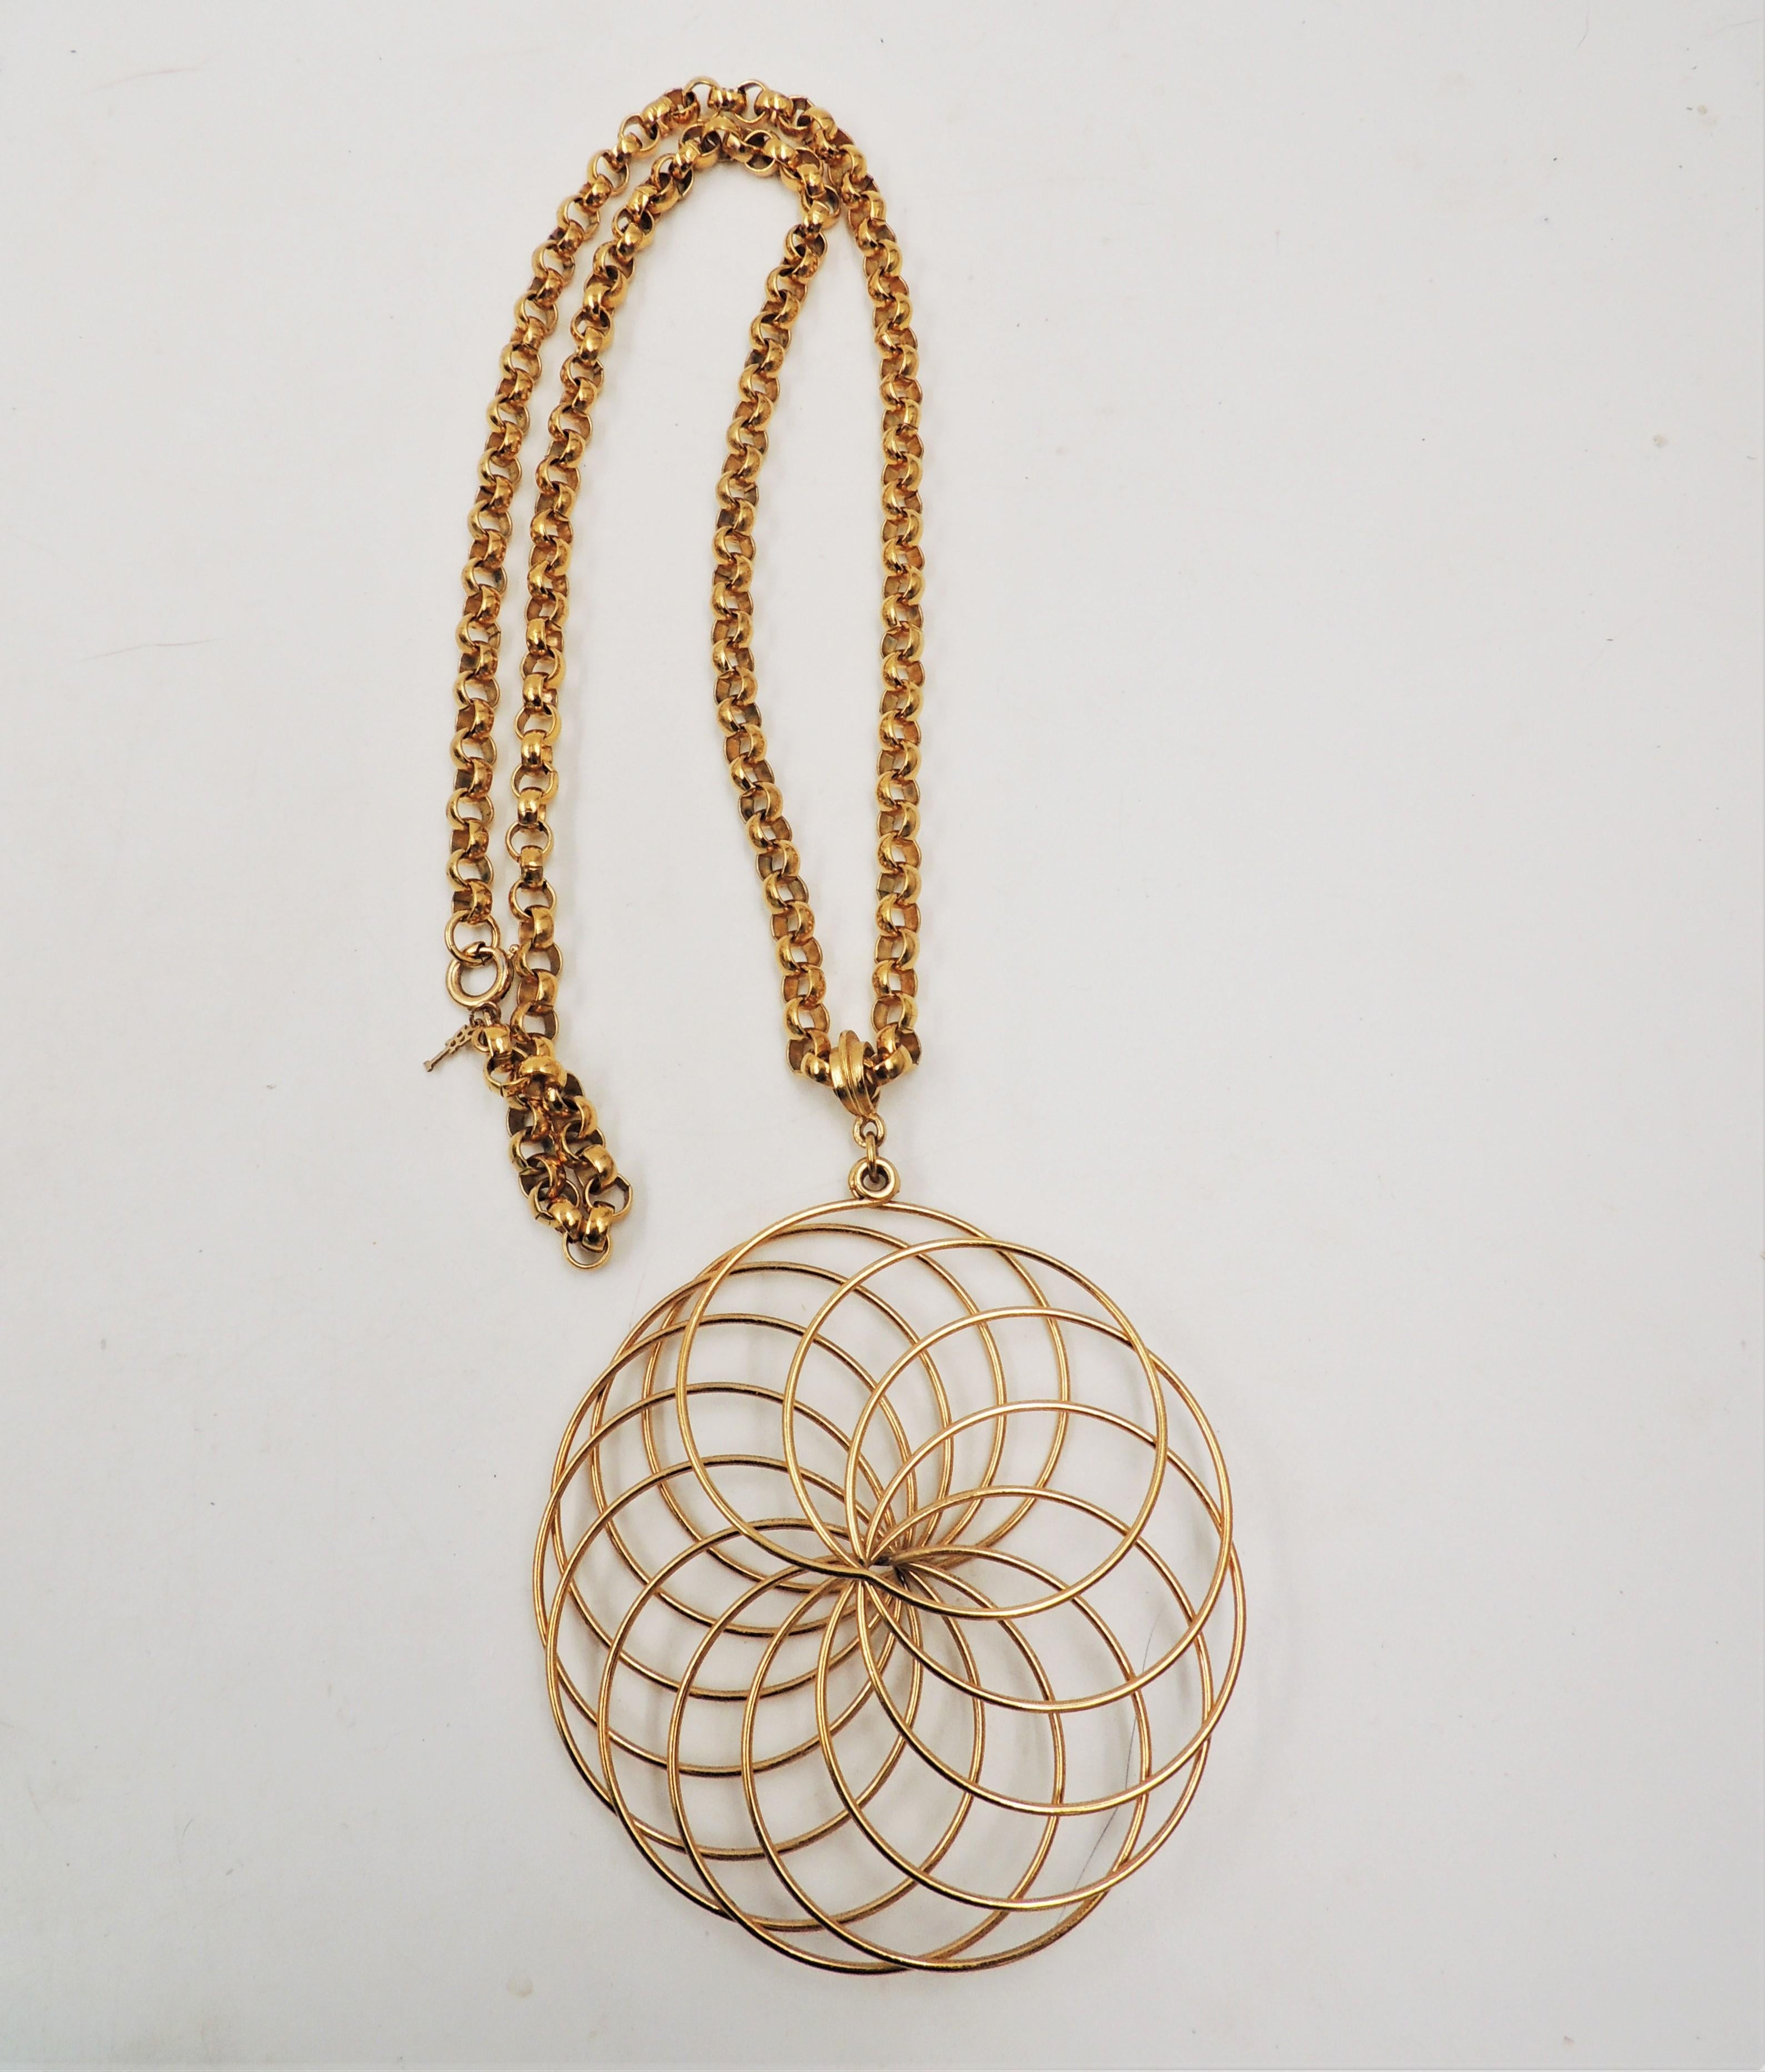 Vintage Signed Crown Trifari Goldtone Spiral Pendant Necklace, 1974 Ad Piece For Sale 4